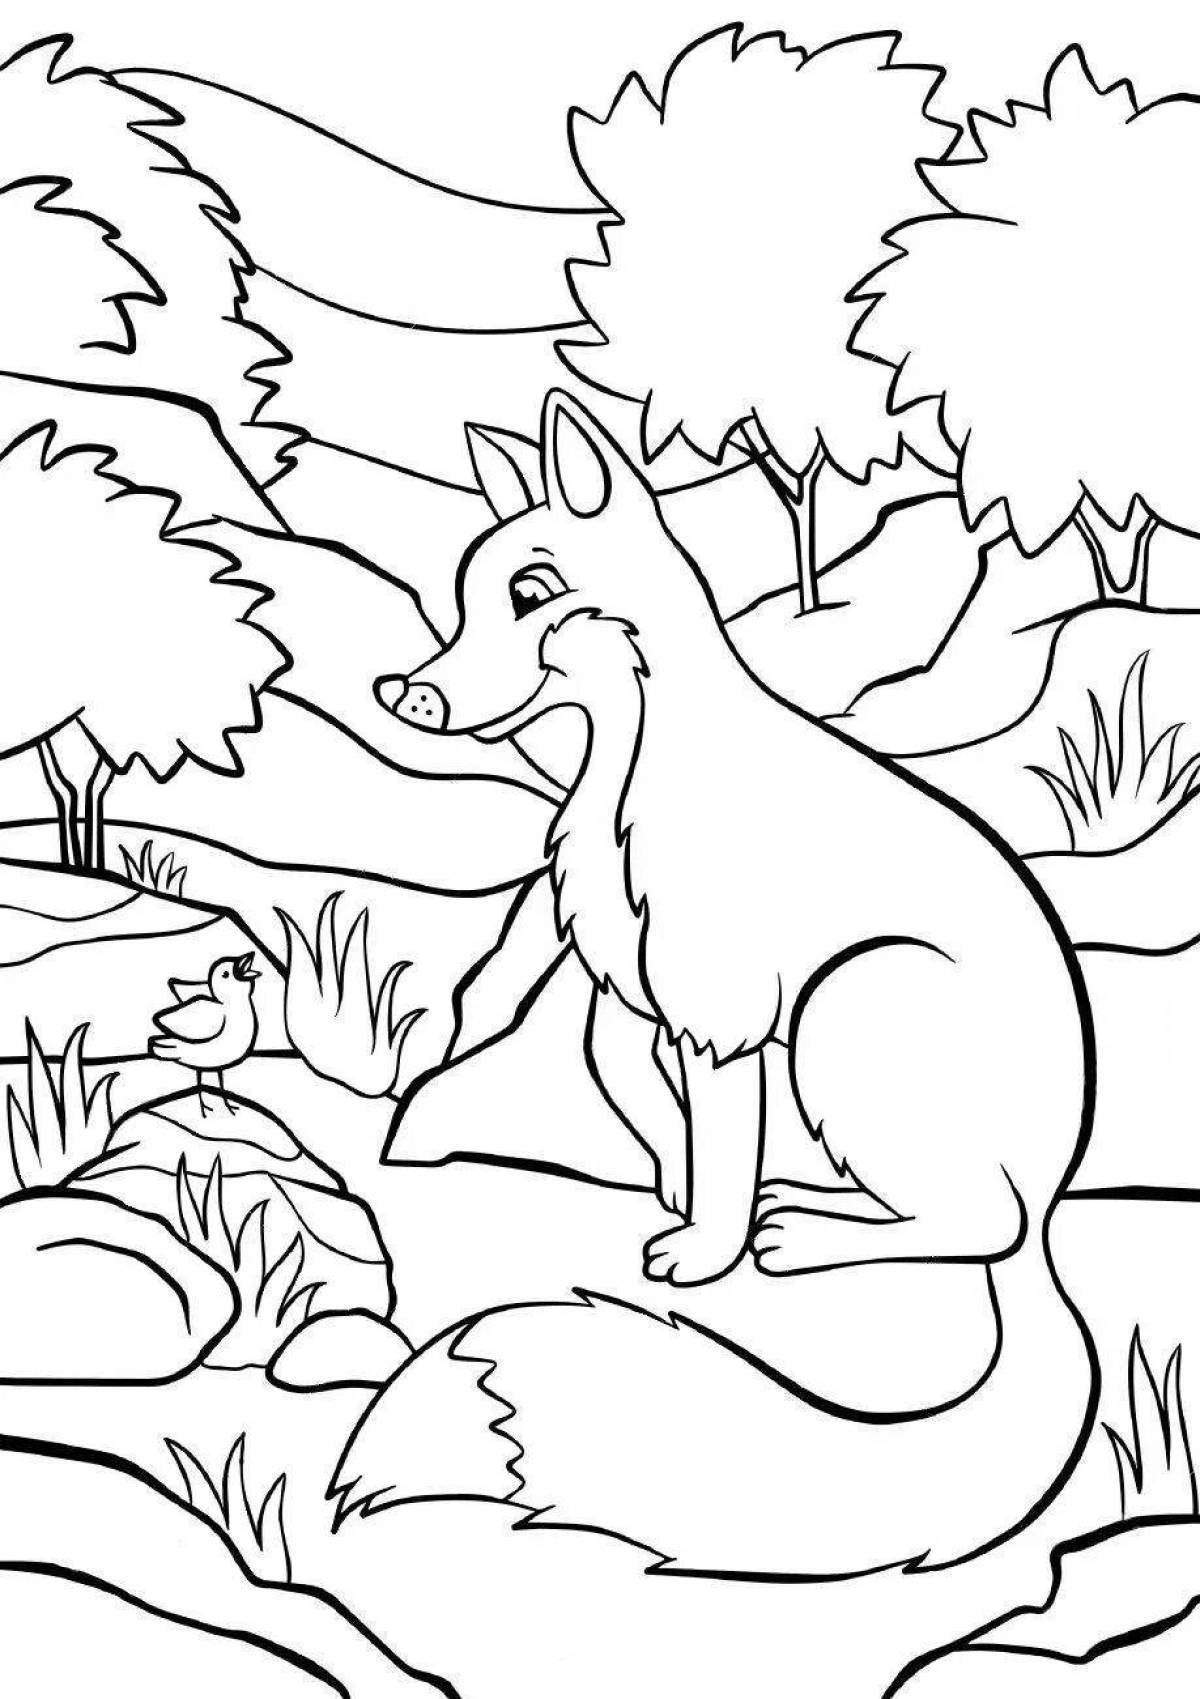 Agile sly fox coloring book